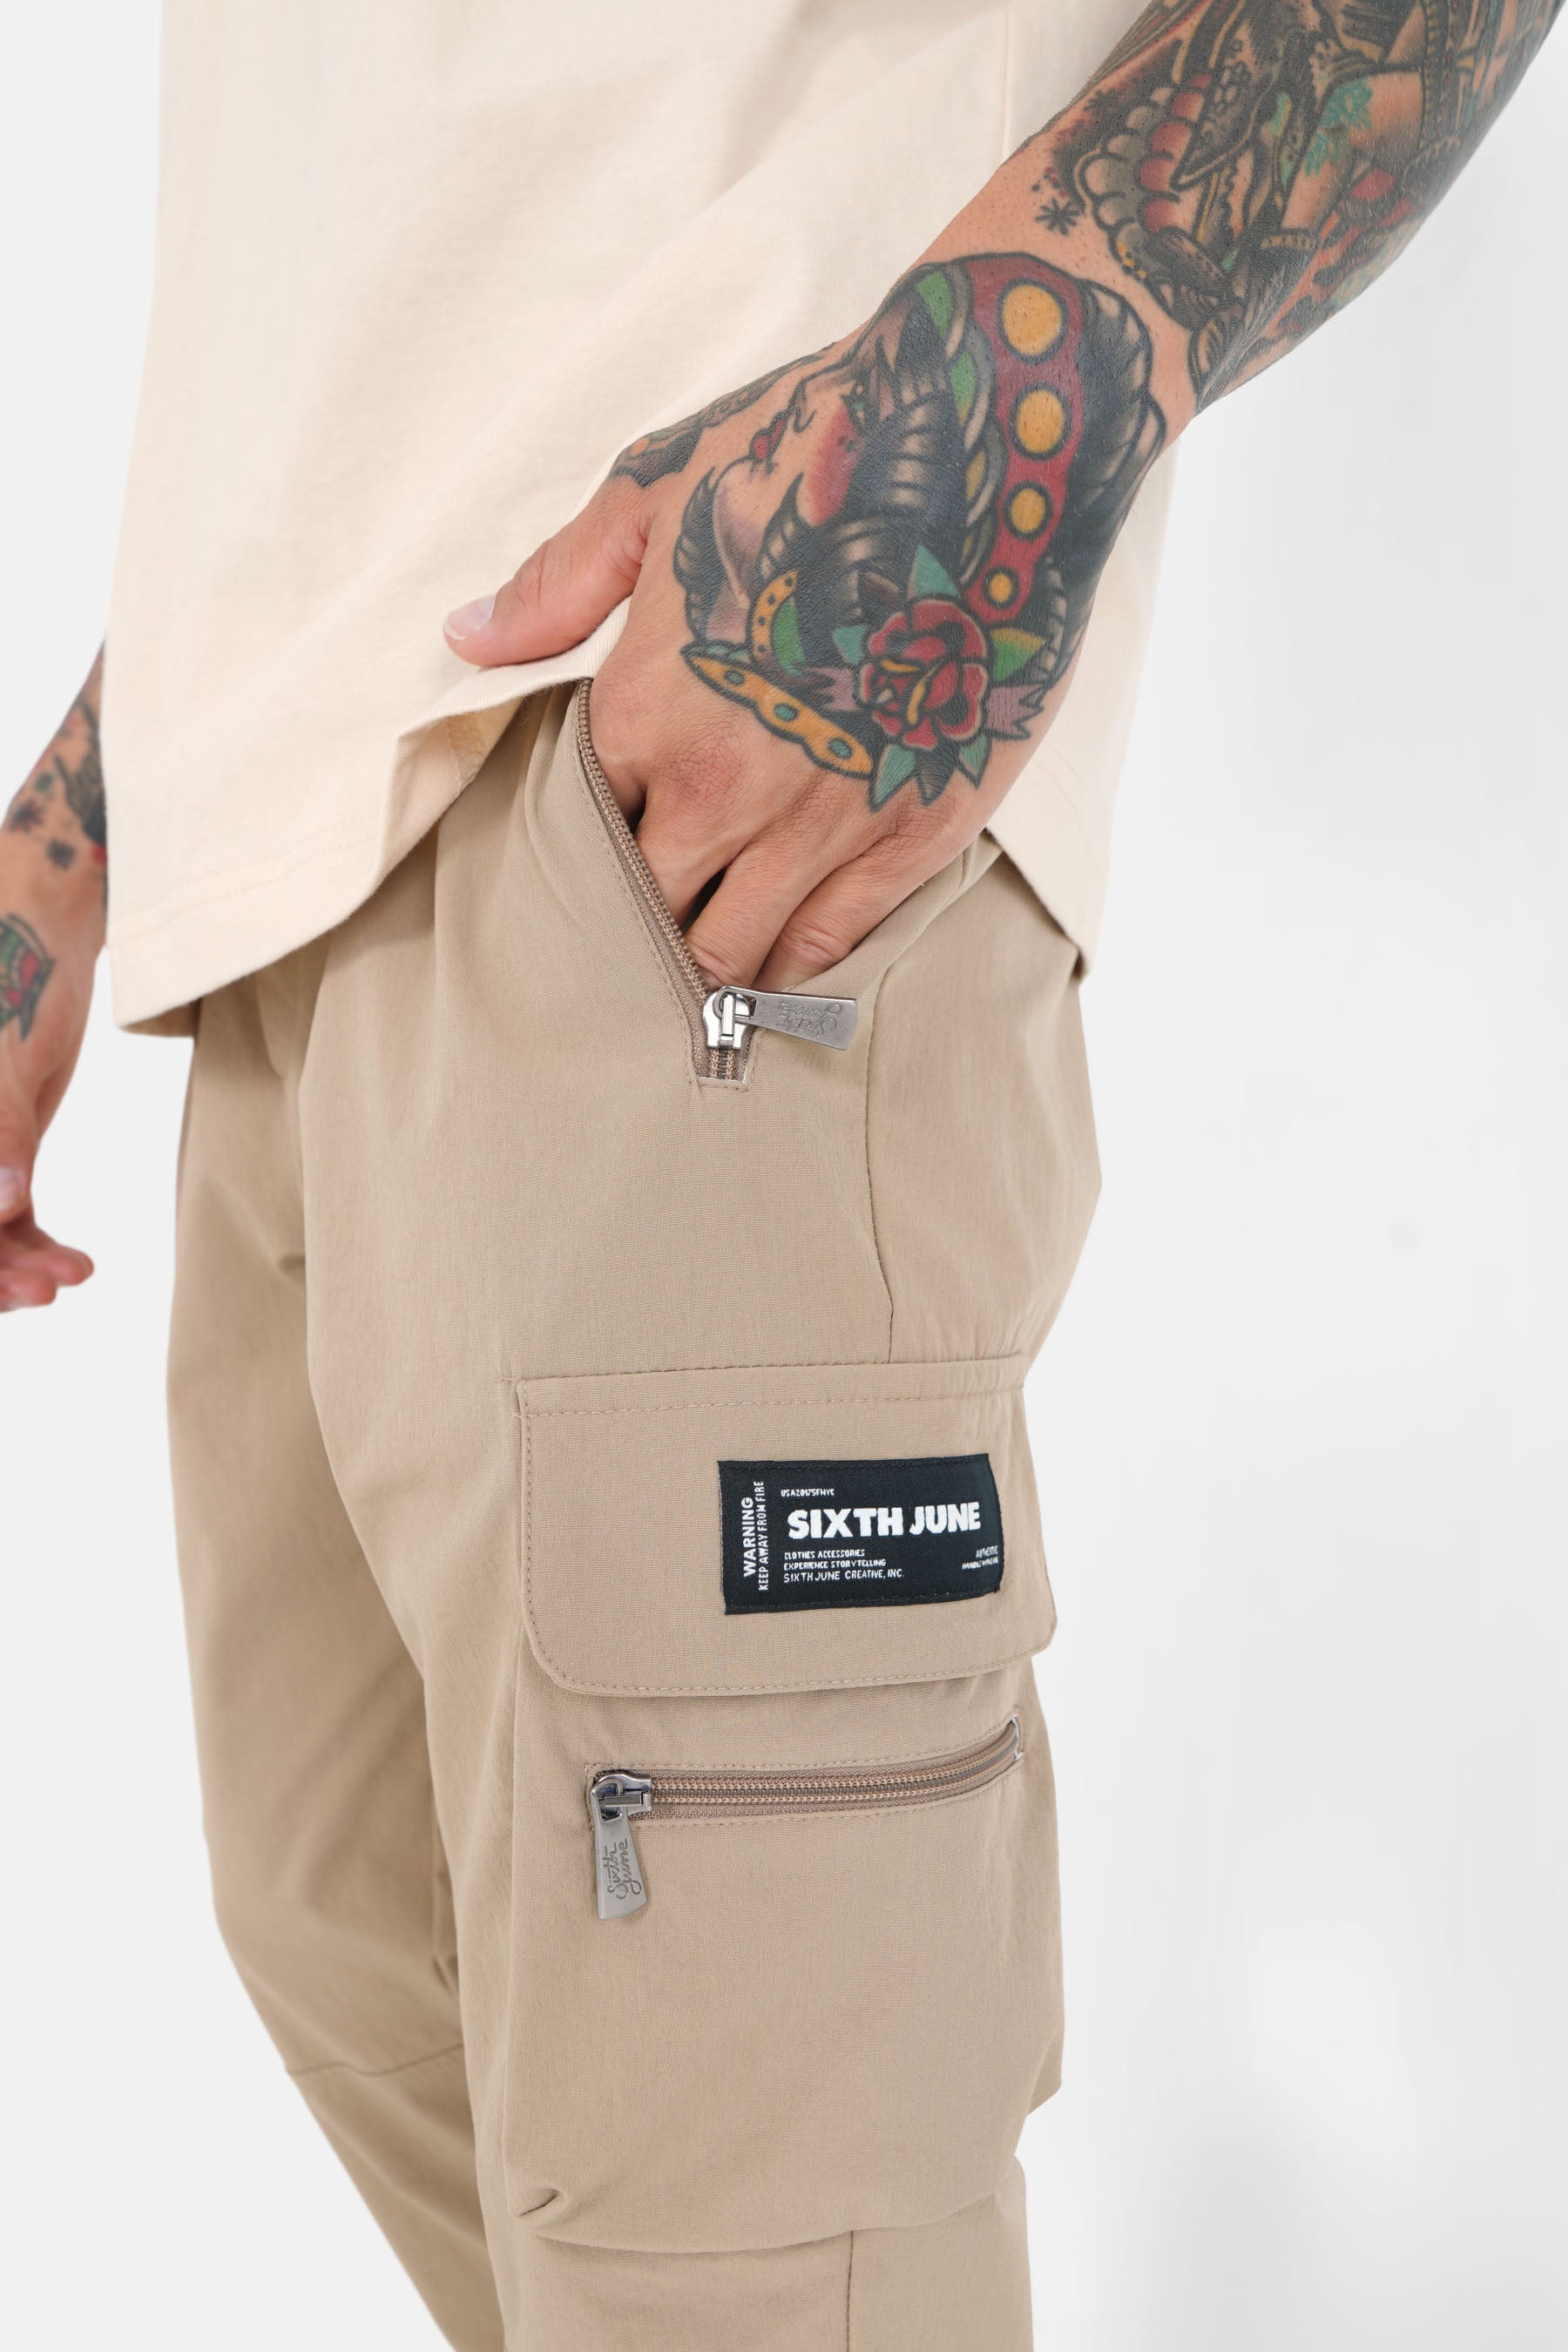 Pantalon poches cargo nylon Beige